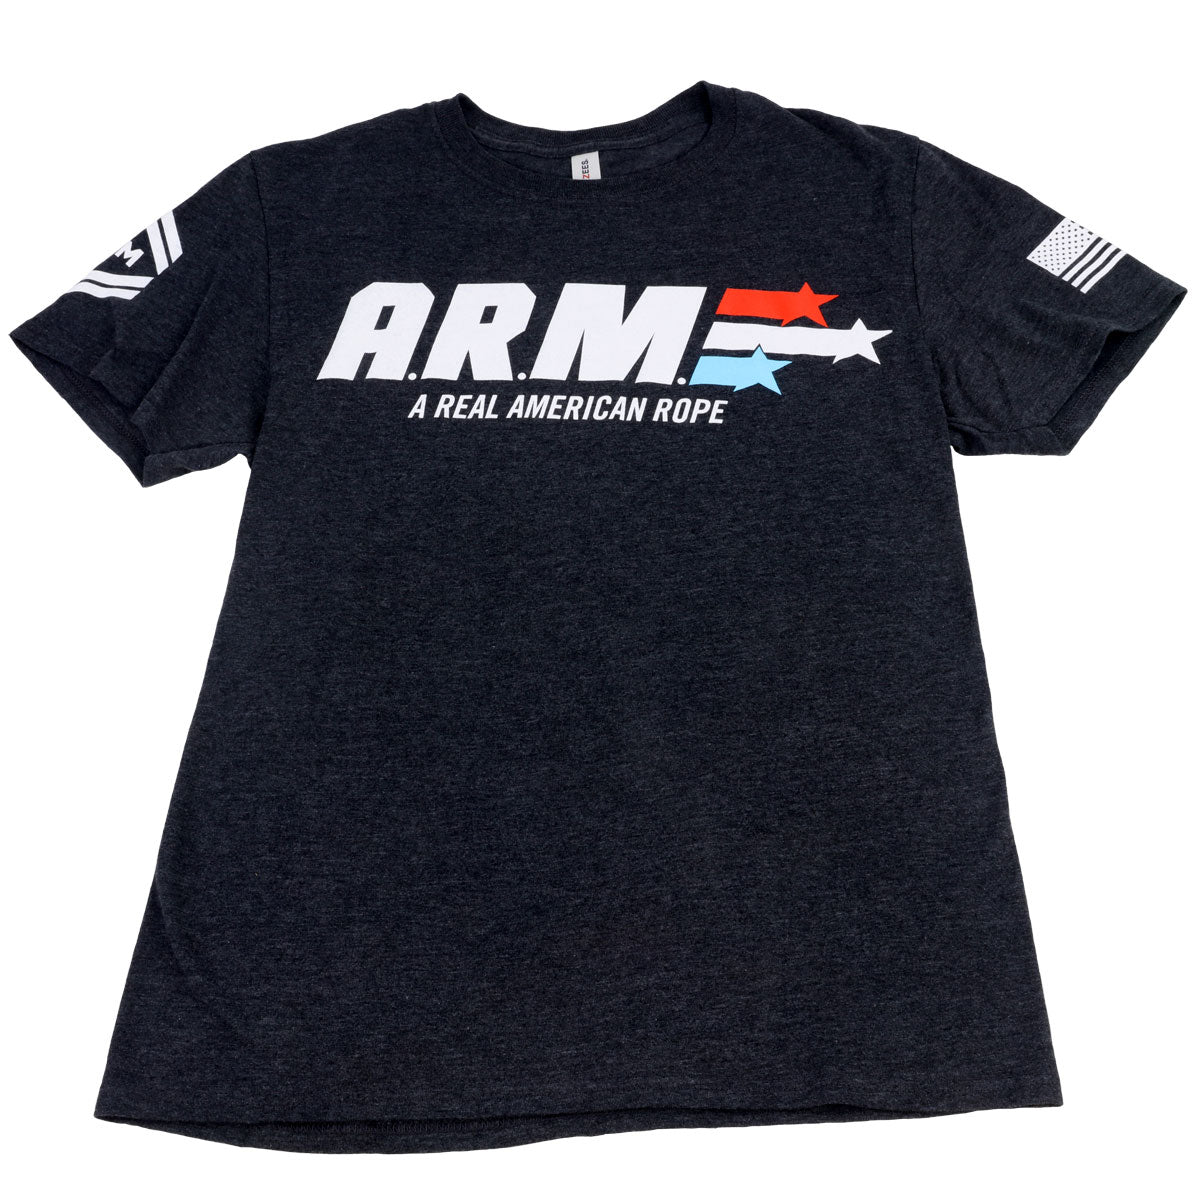 ARM GI - Stealth Black T-Shirt